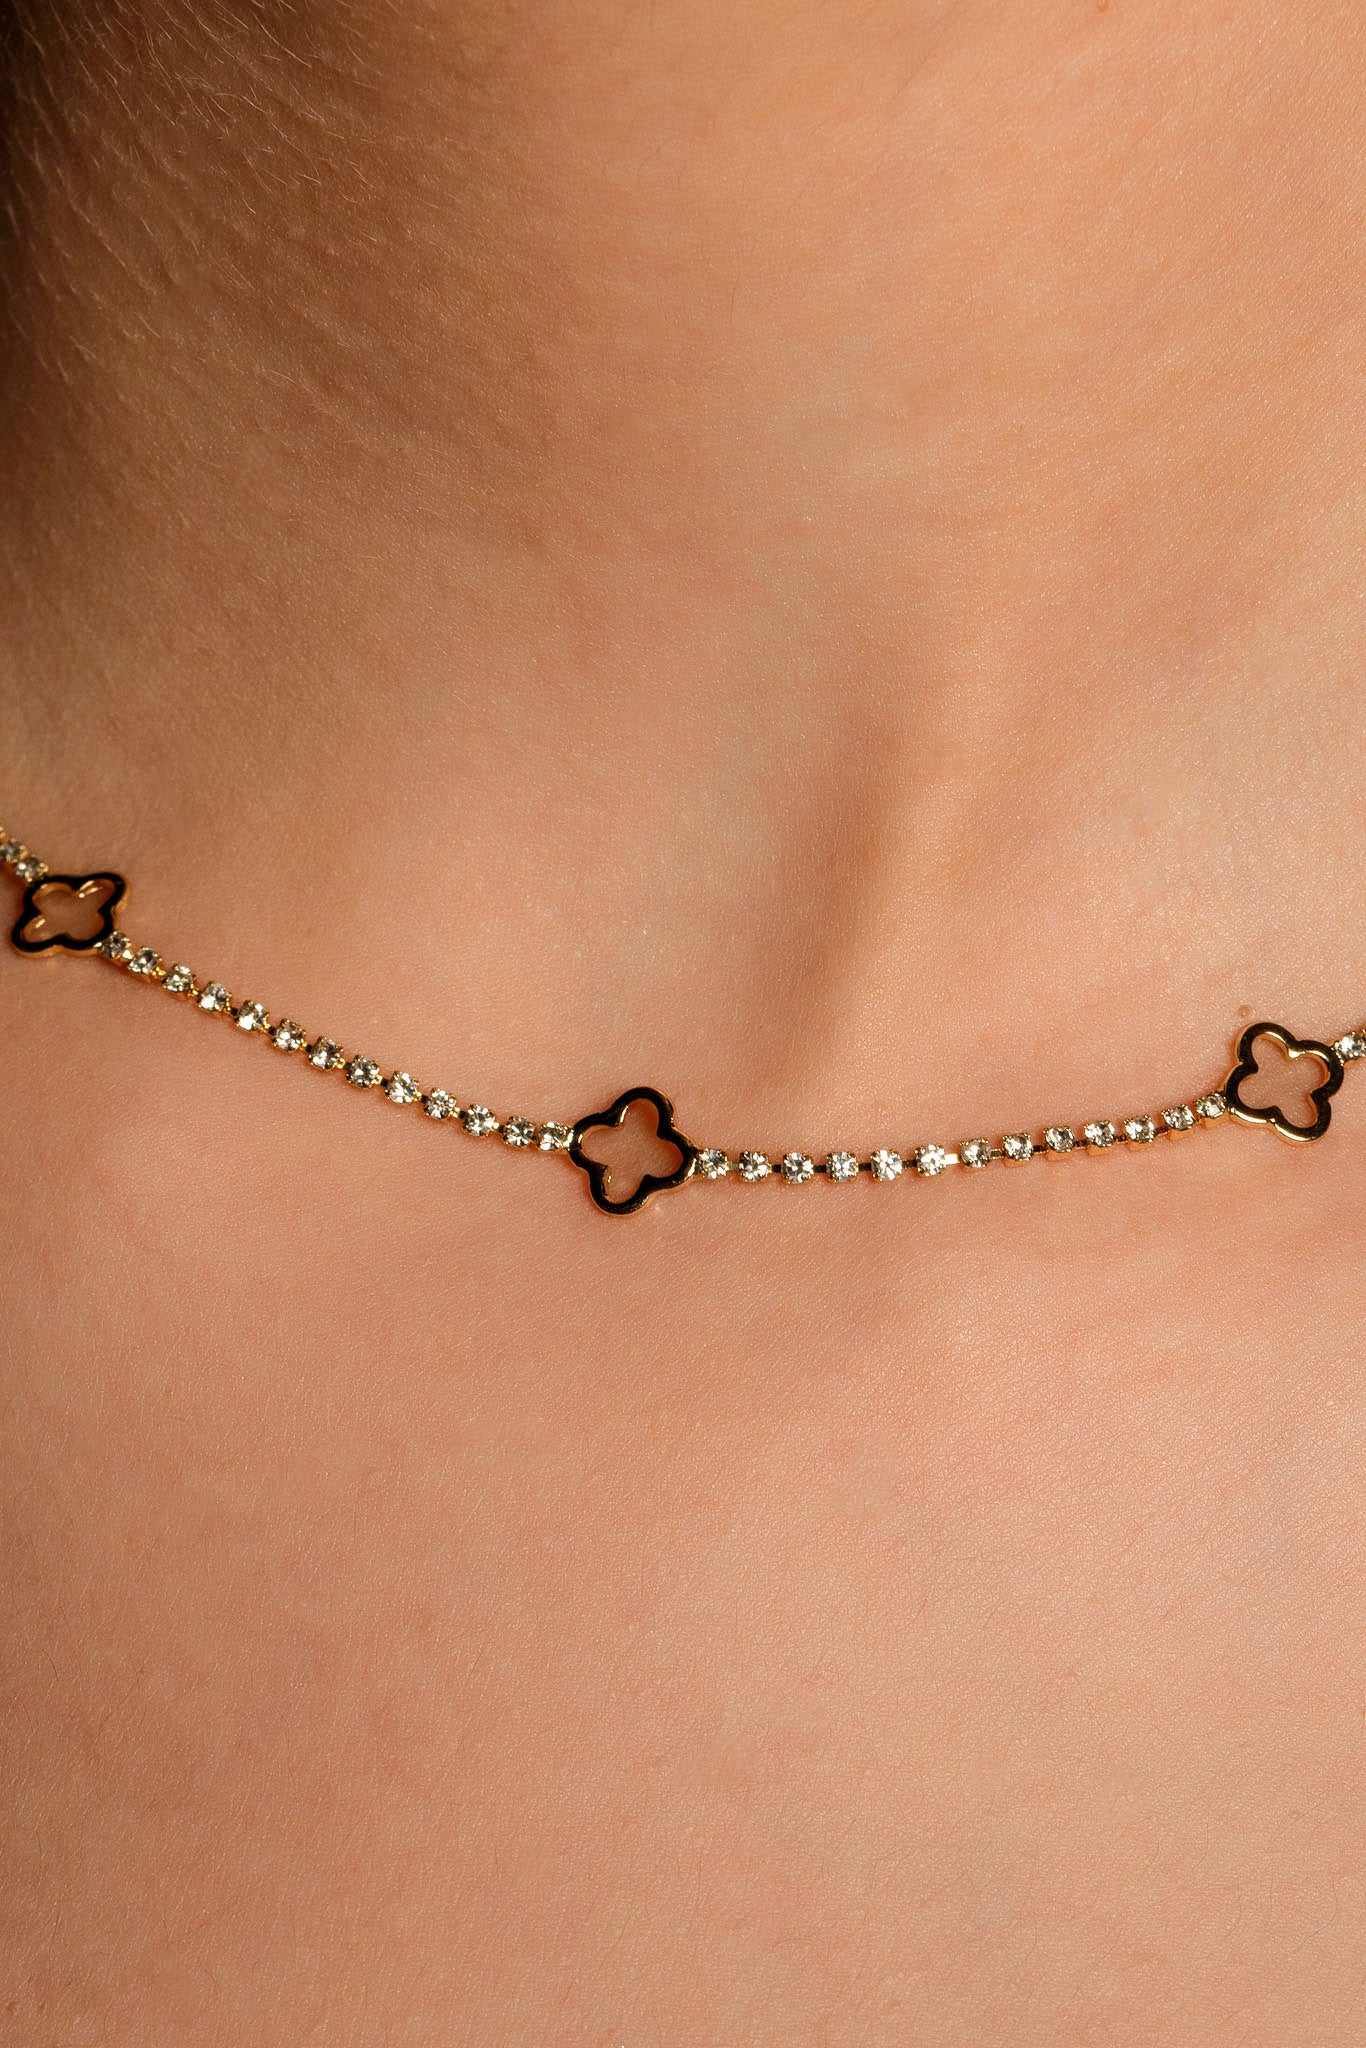 Rhinestone Necklace with Mini Clovers